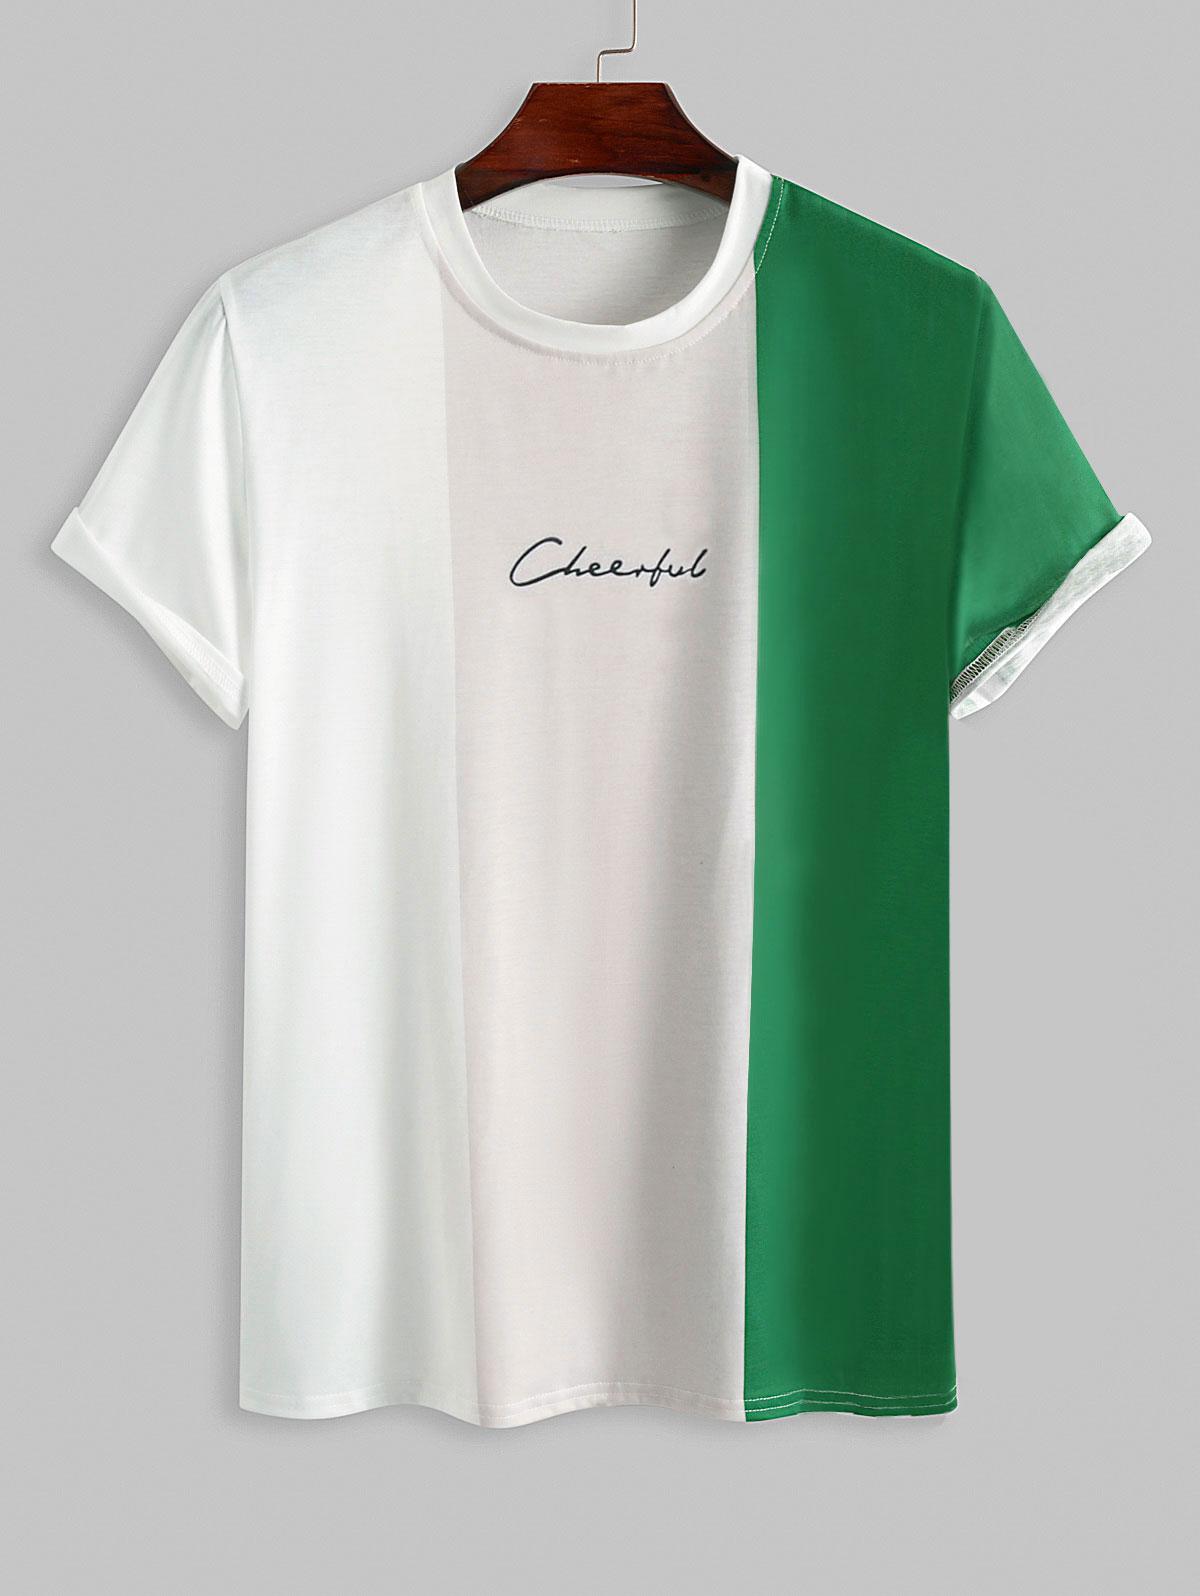 ZAFUL Men's ZAFUL Striped Cheerful Letter Printed Short Sleeves T-shirt Xxl Green